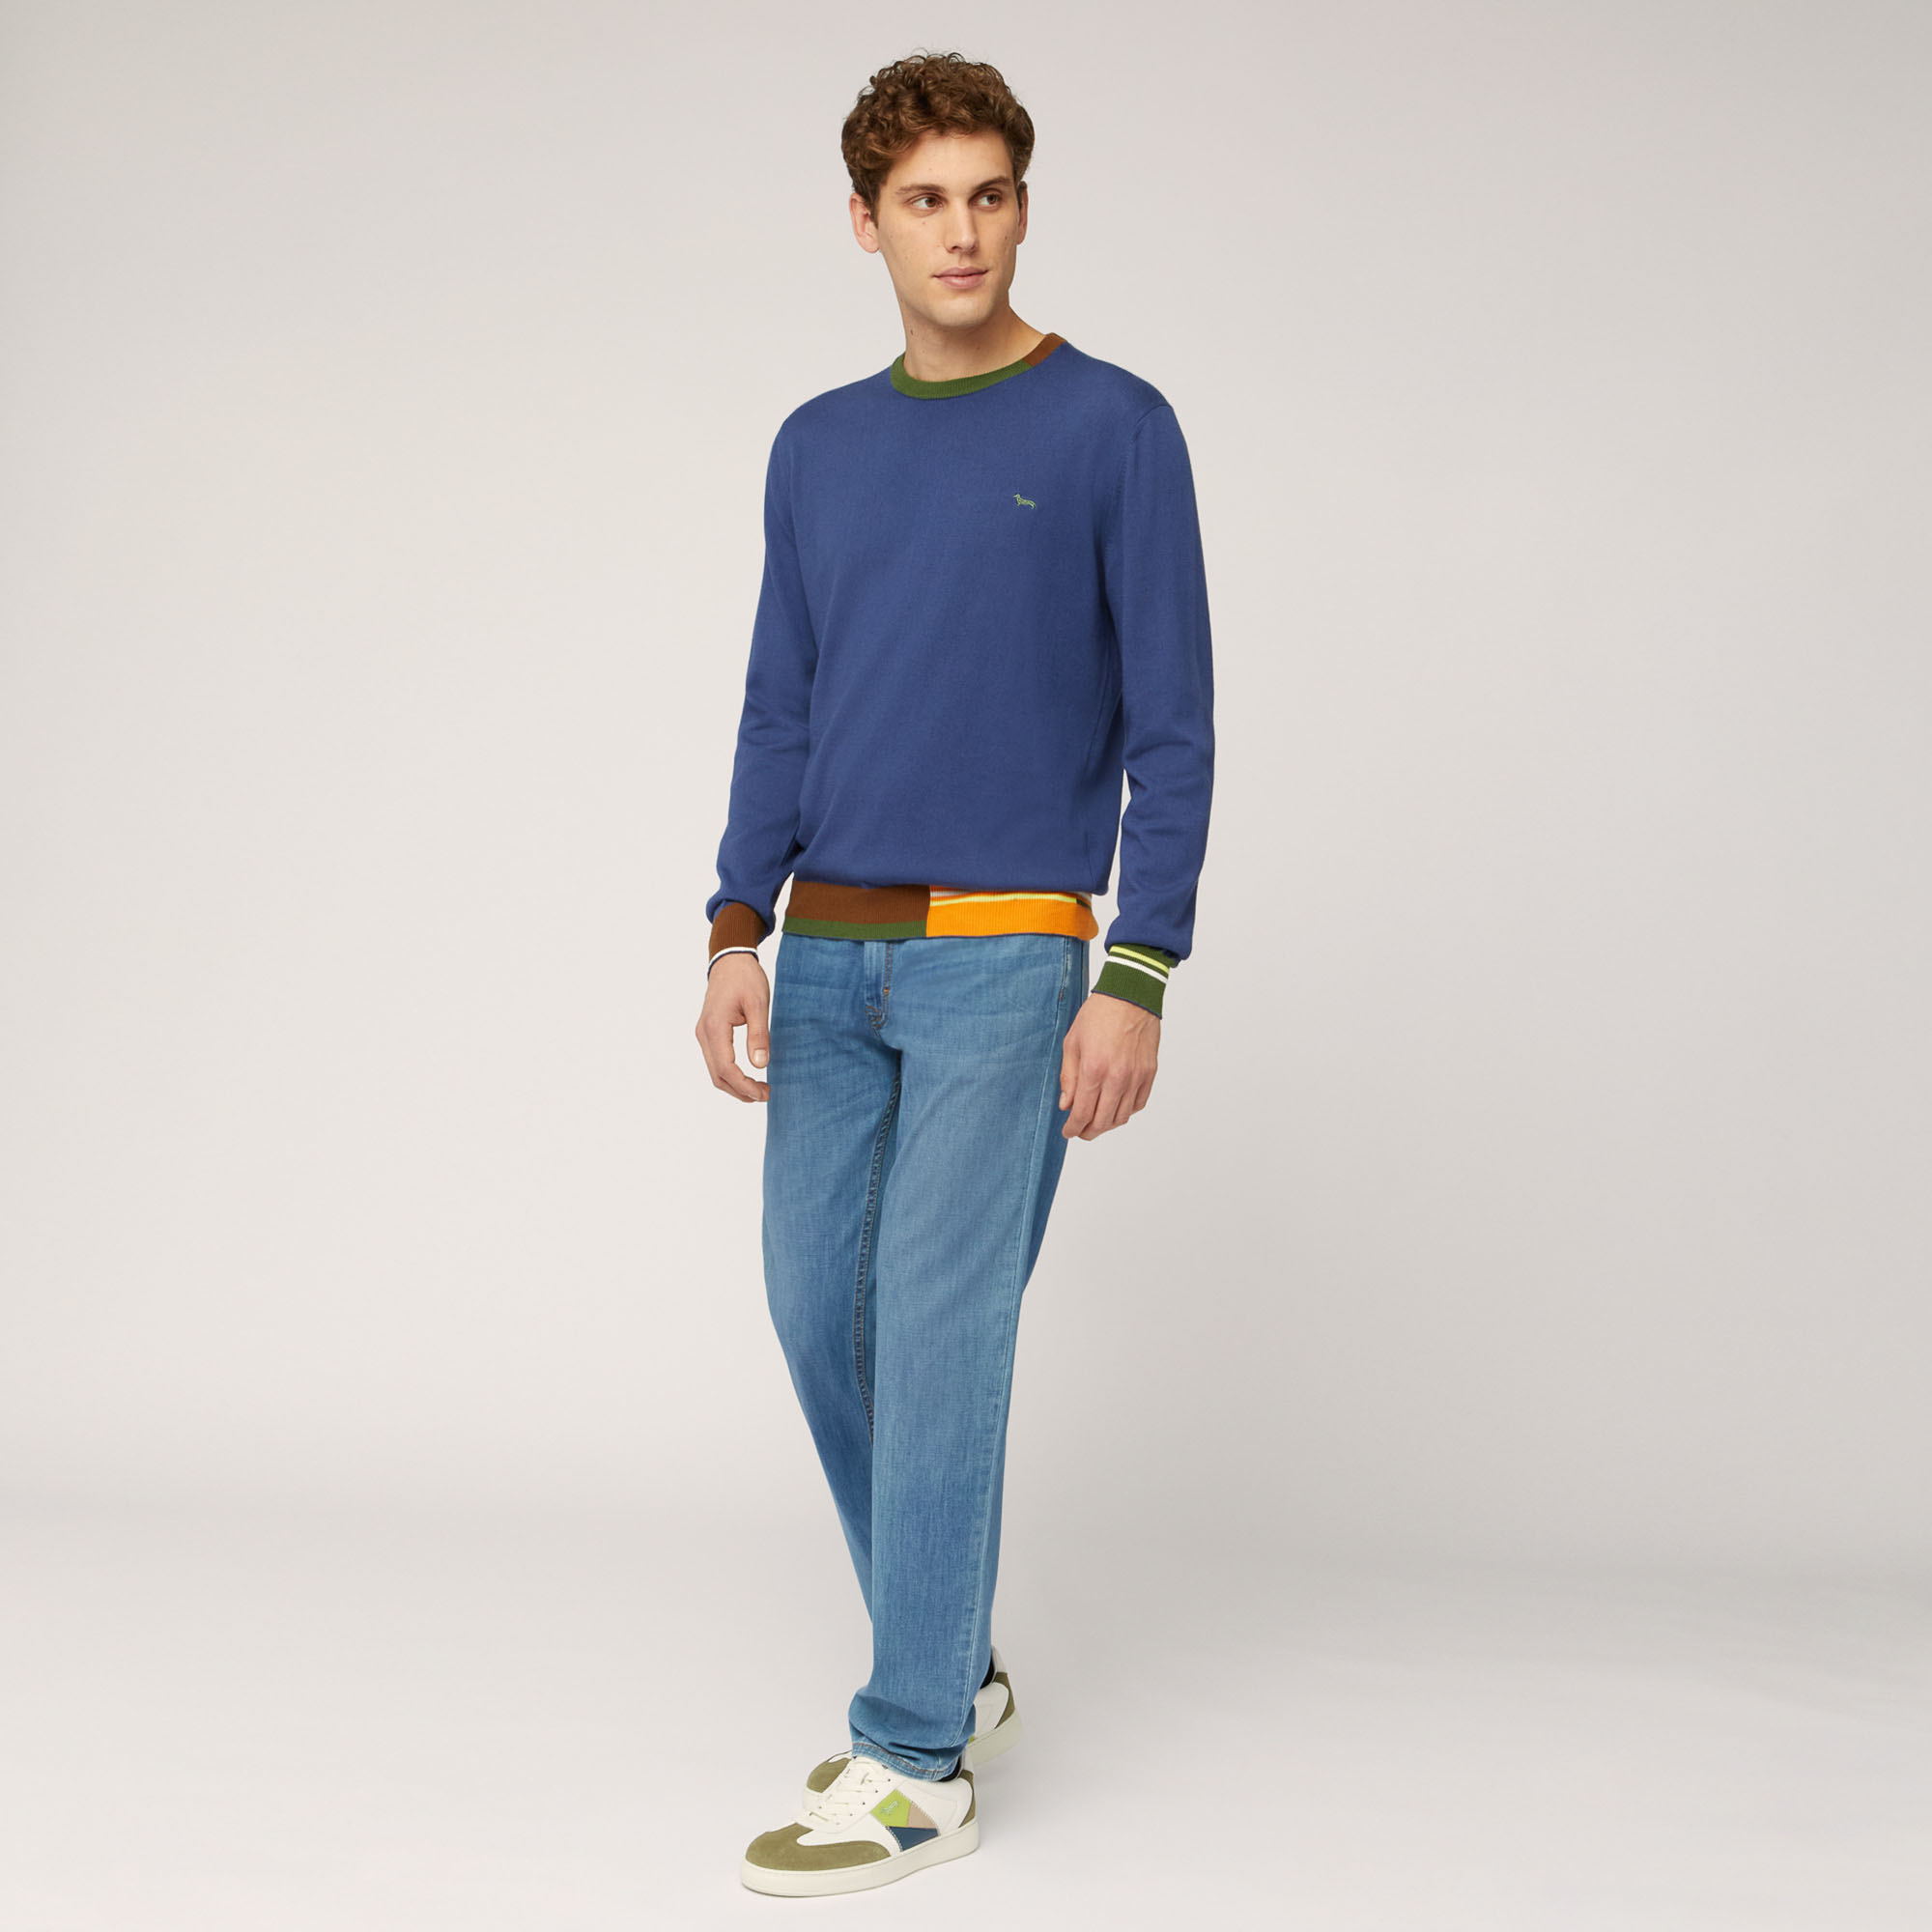 Rundhals-Pullover aus Bio-Baumwolle mit Color-Block-Details, Blau, large image number 3